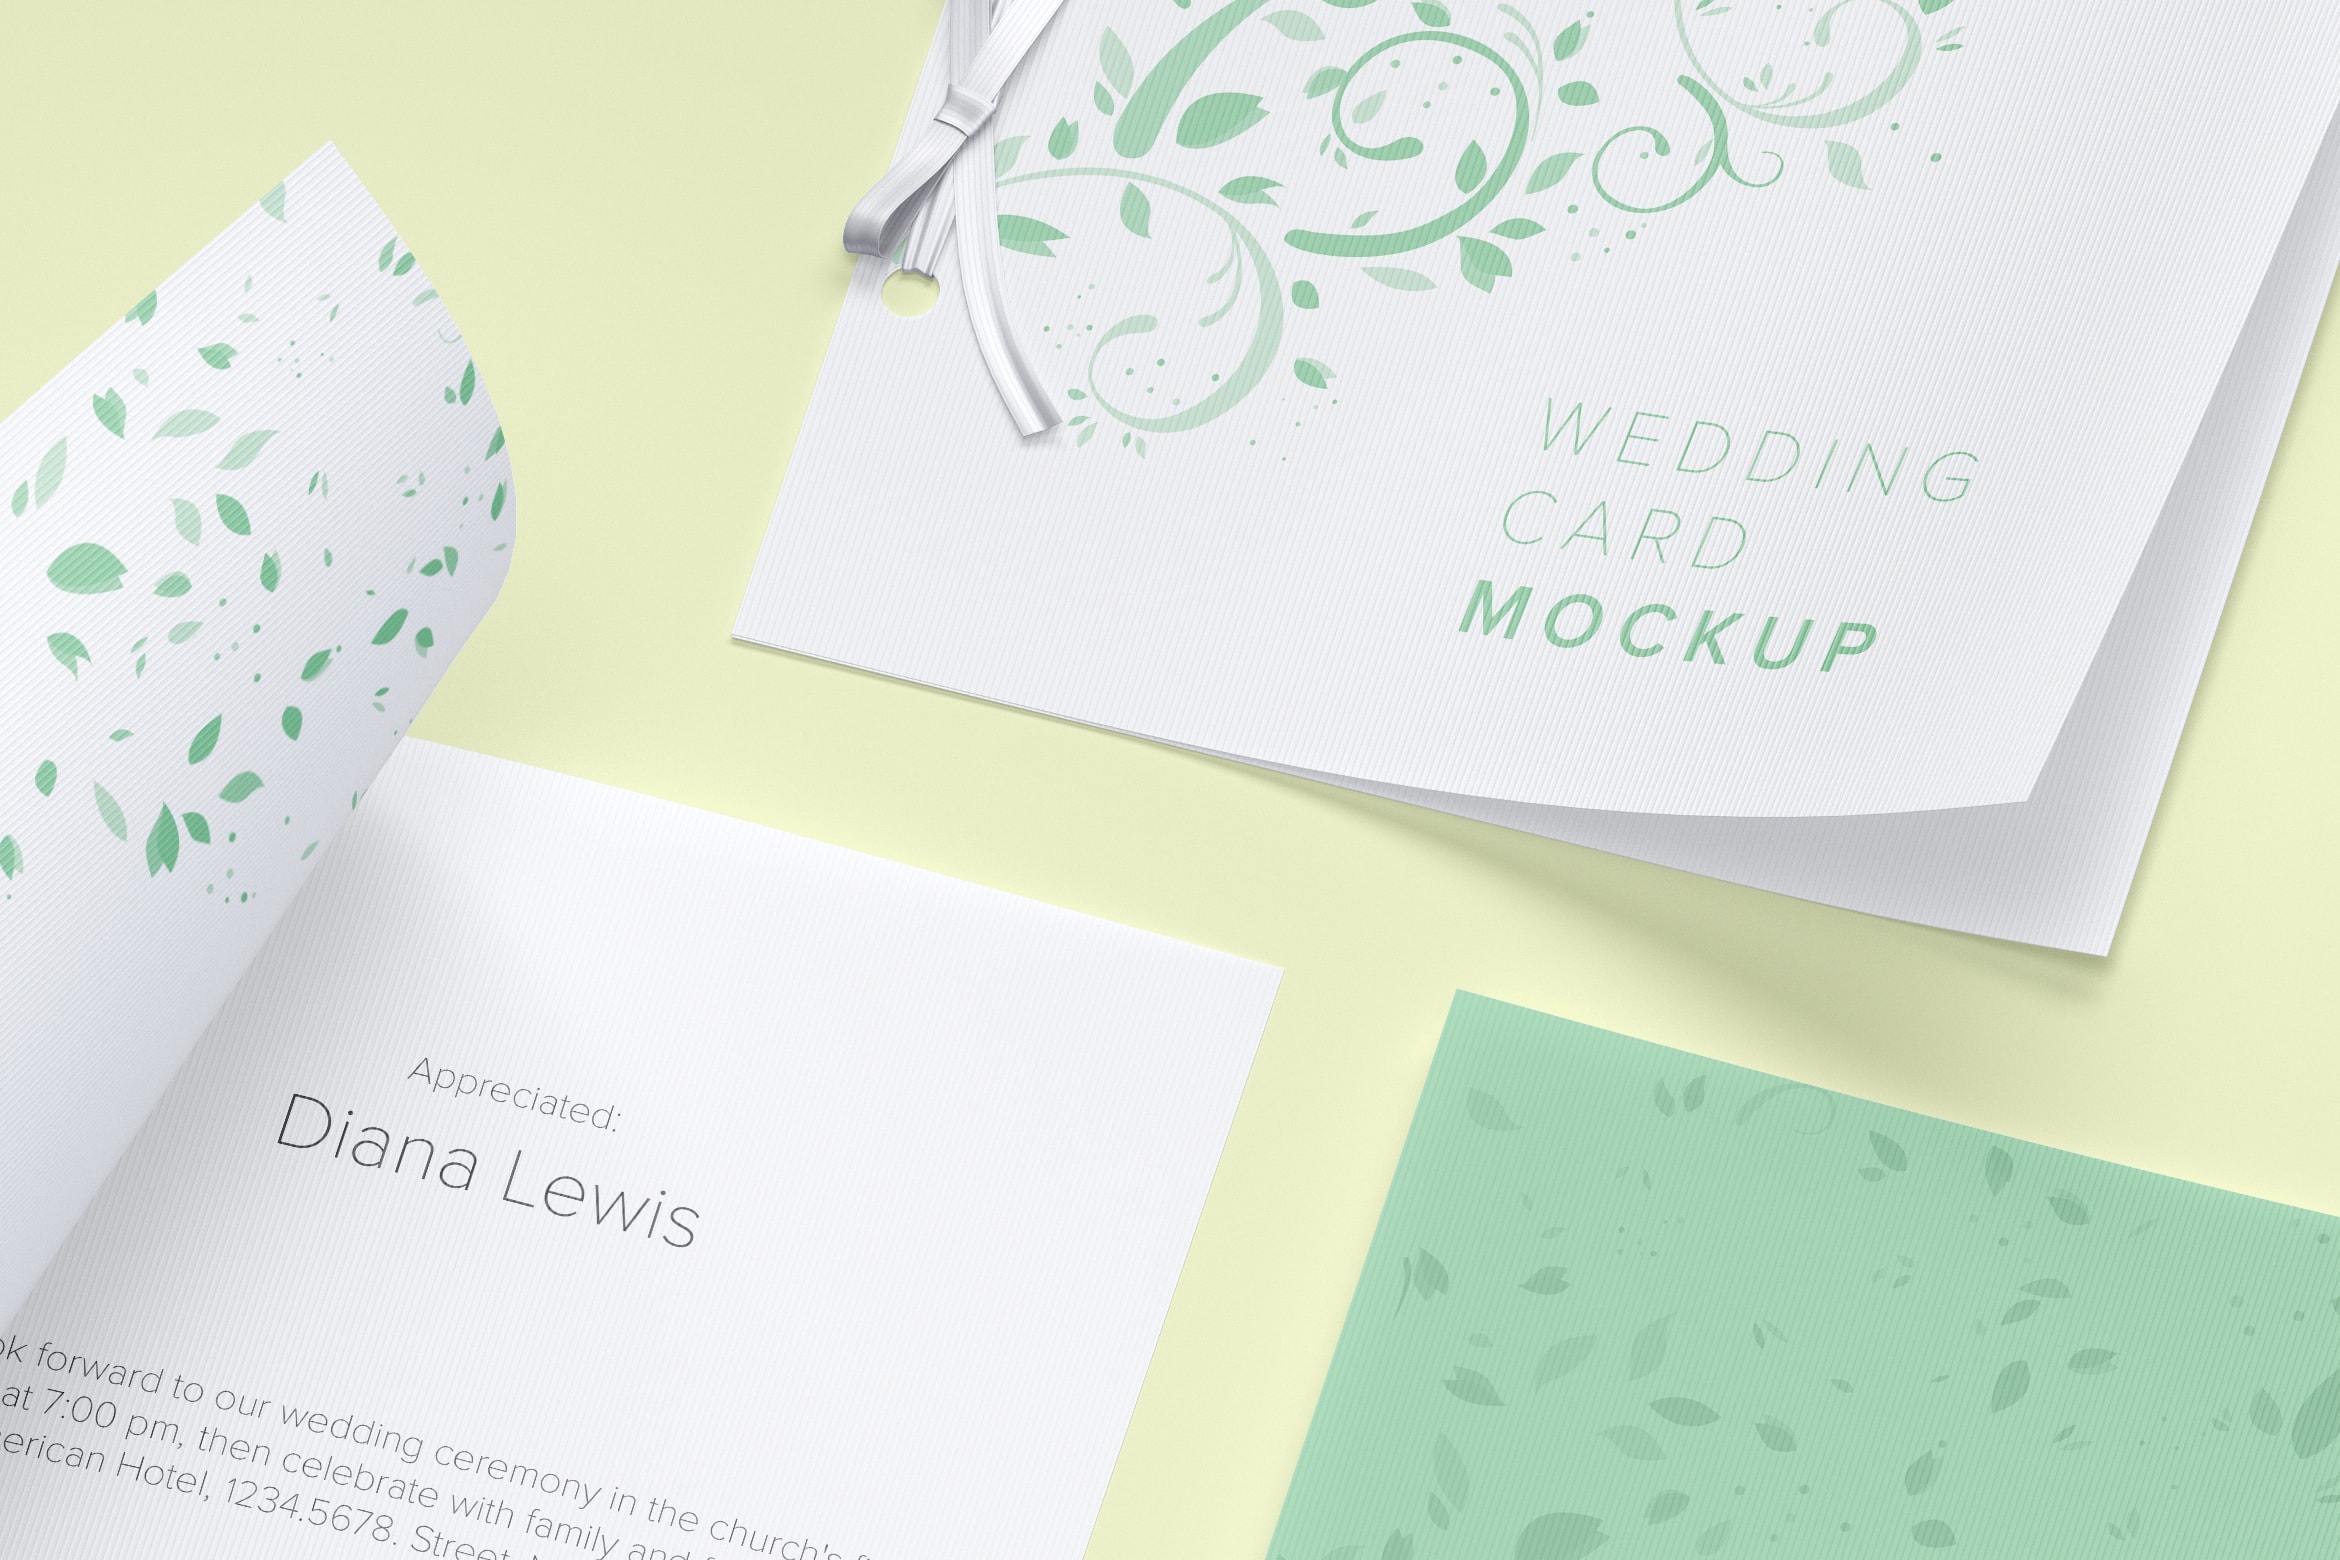 婚礼邀请函封面&内页设计样机模板 Wedding Card Mockup, Covers and Inner Pages插图(1)